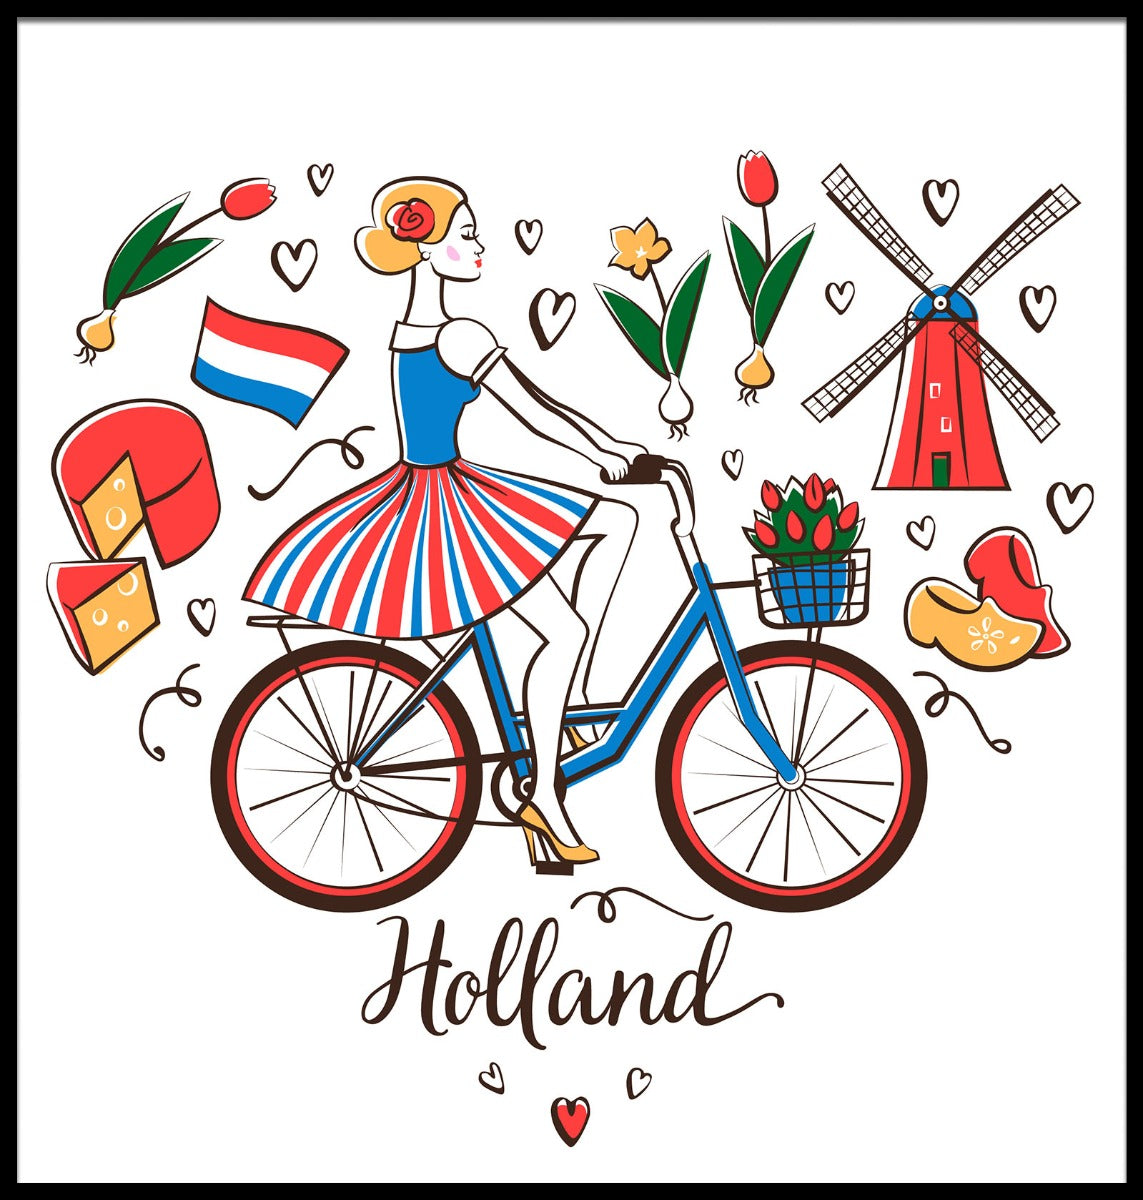  Fiets Holland Illustratie poster